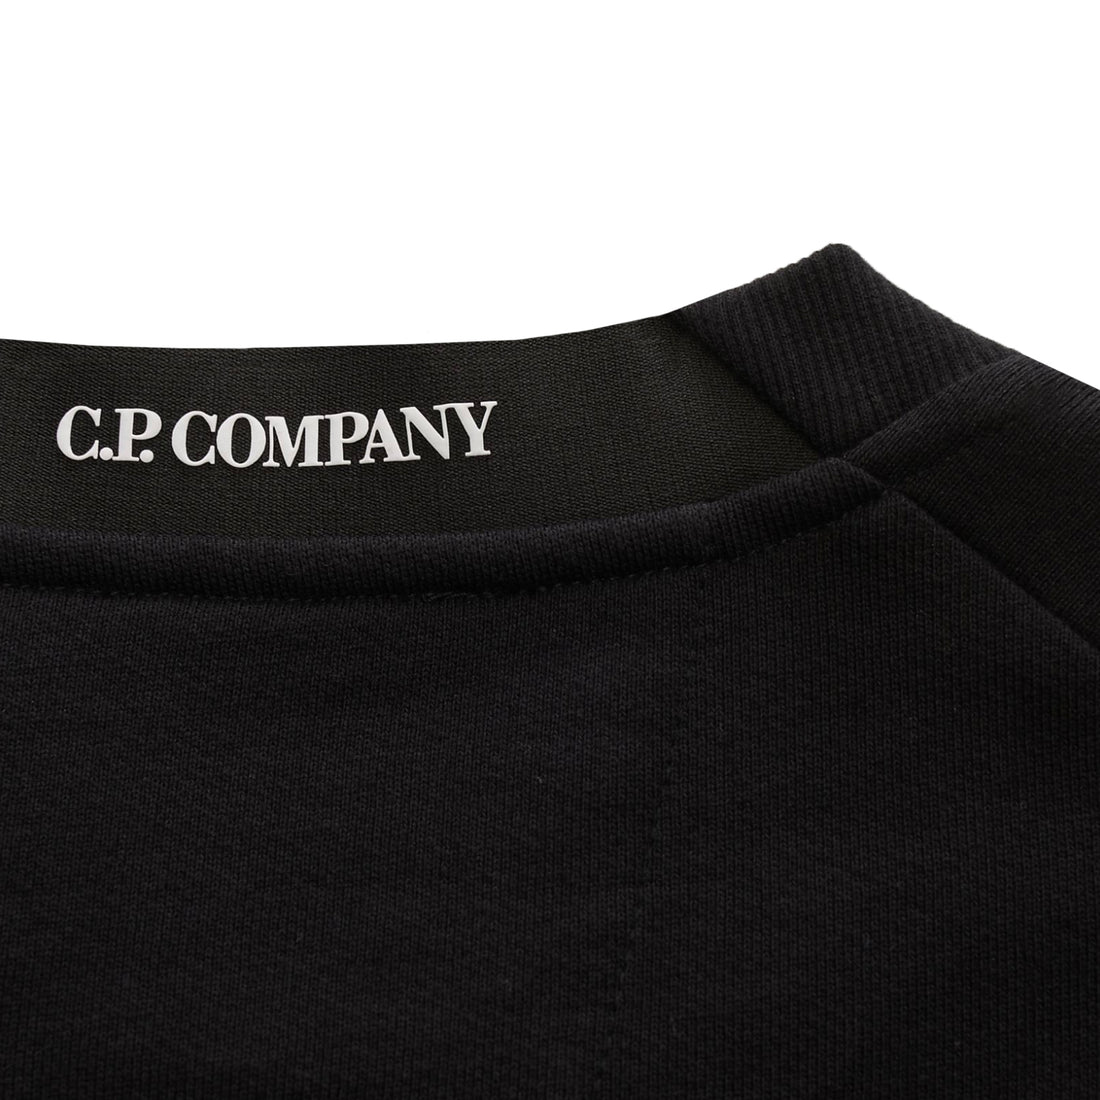 C.P Company Lens Sweatshirt